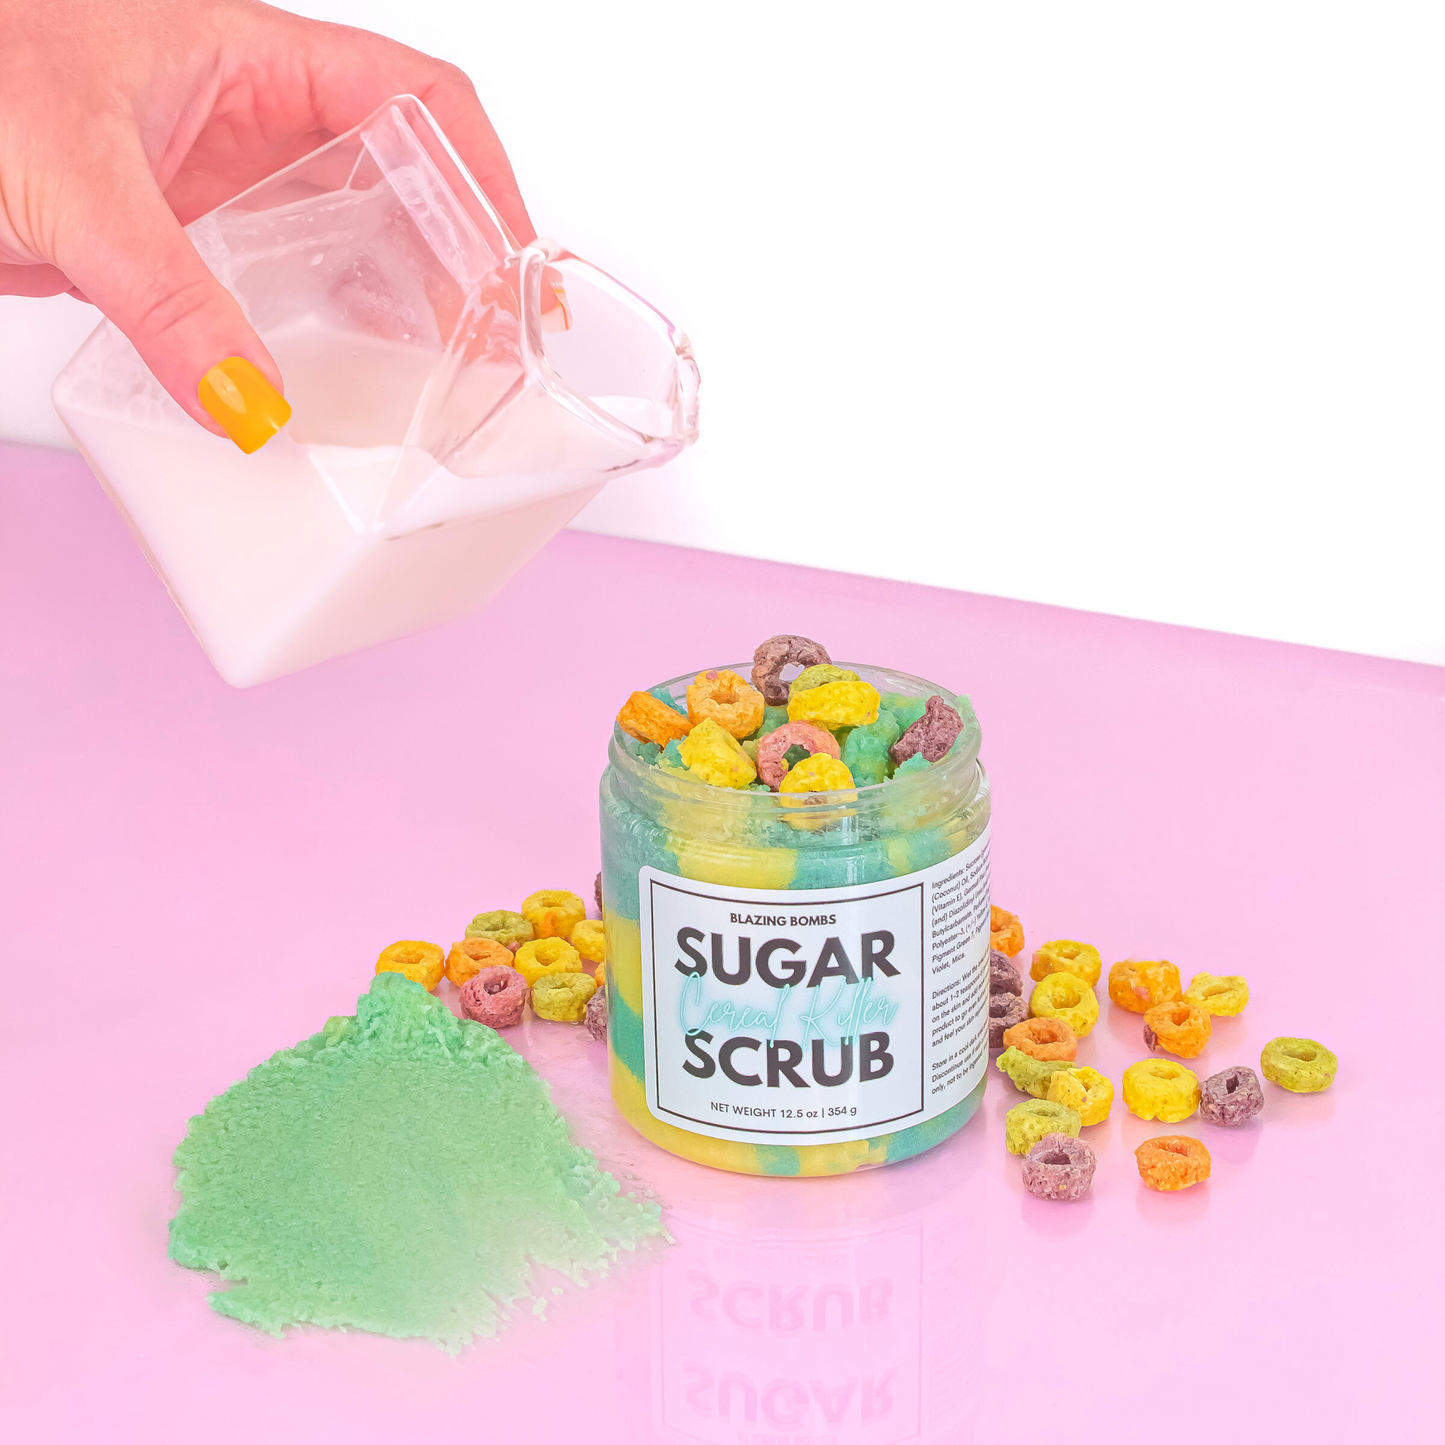 Cereal Killer Sugar Scrub